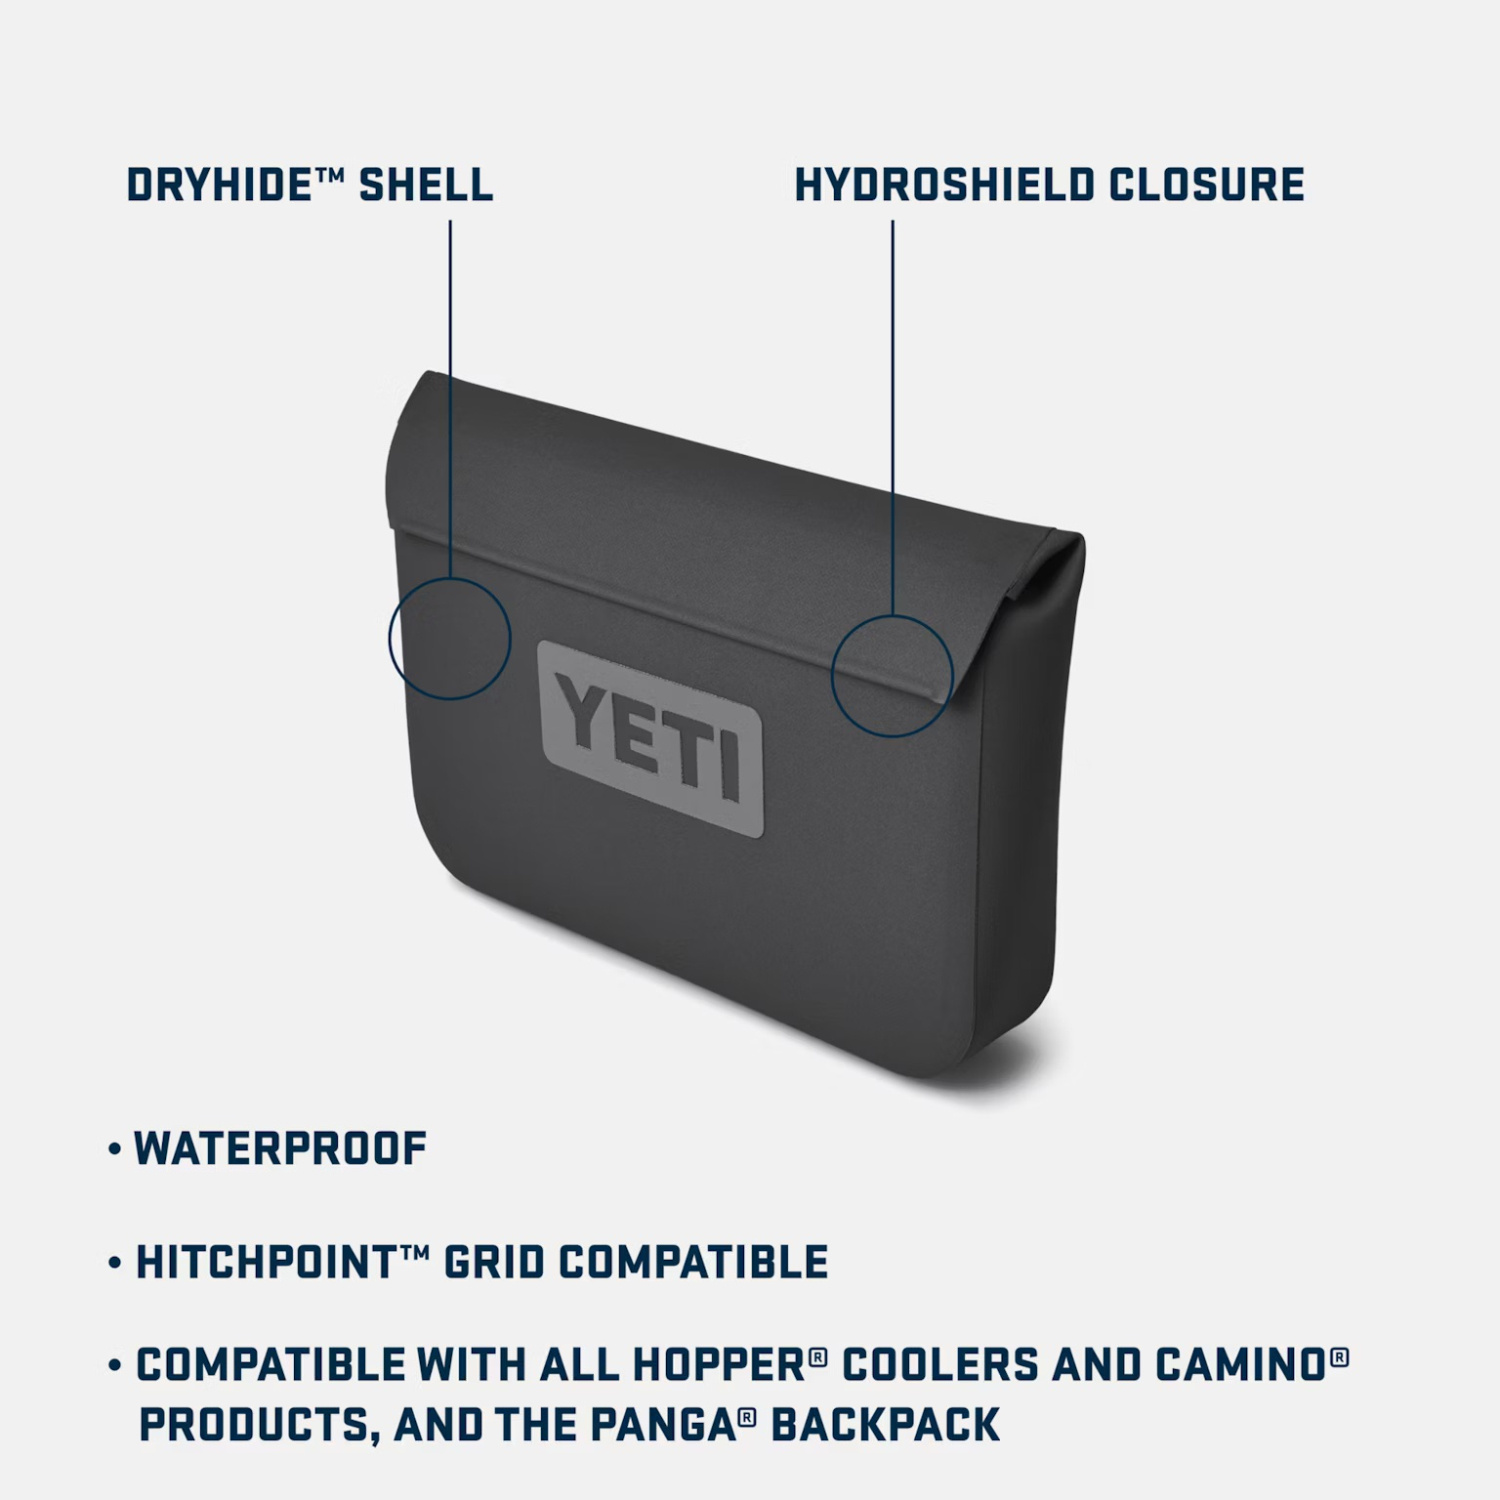 Yeti Sidekick Dry 3L Waterproof Gear Bag - Charcoal